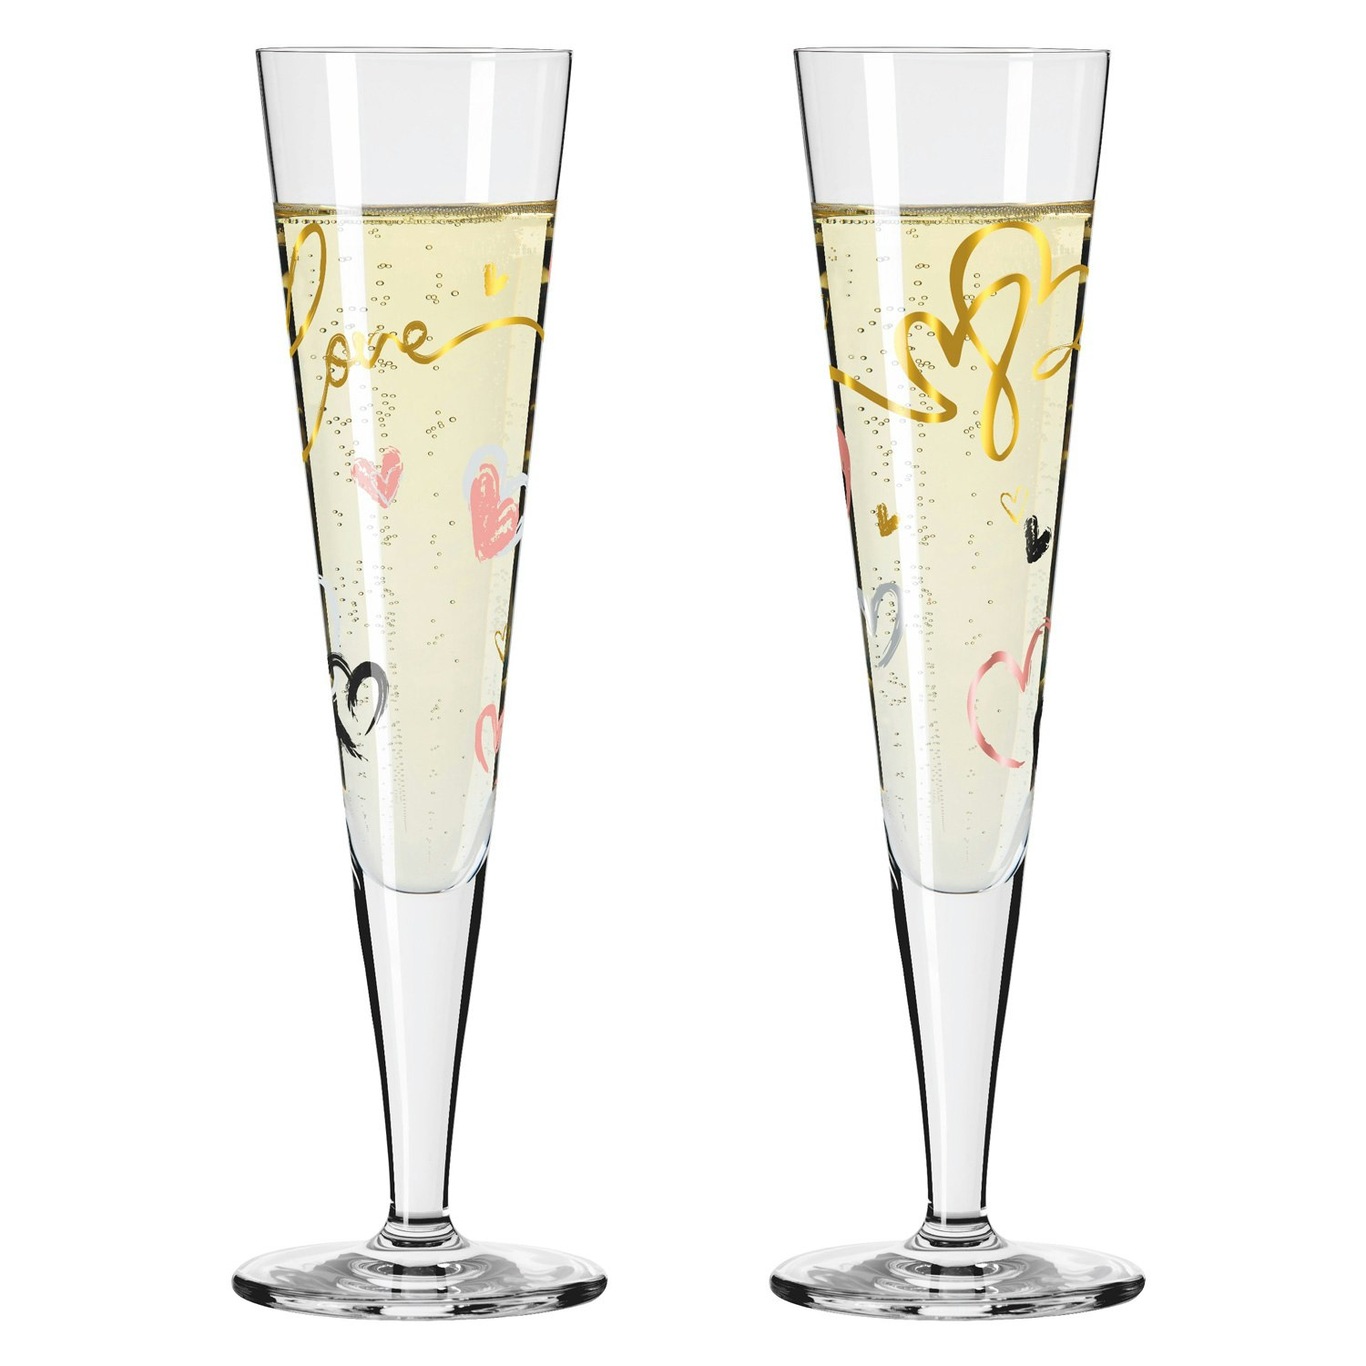 Goldnacht Champagne Glasses 2-pack, 2023